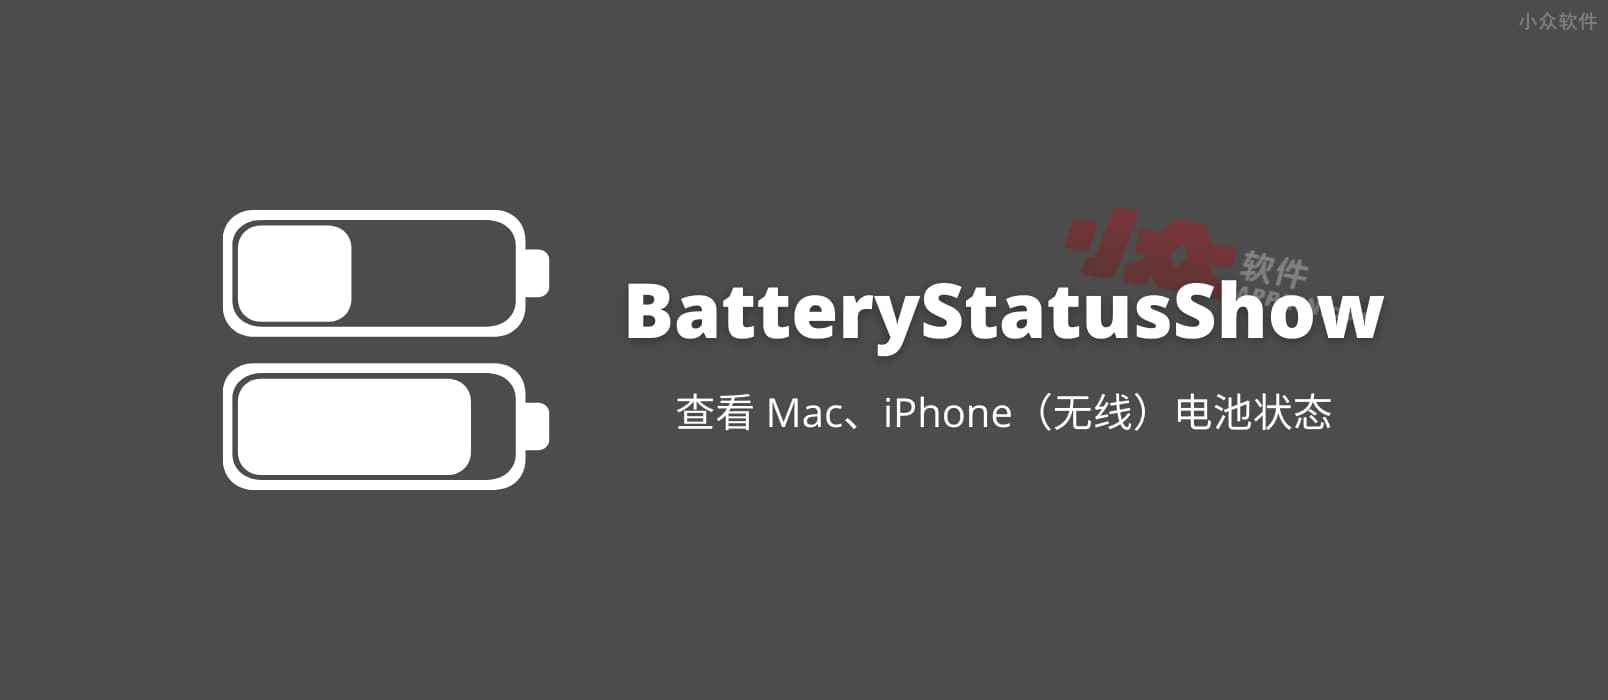 BatteryStatusShow - 查看 Mac、iPhone（无线）电池状态的开源工具[macOS] 1